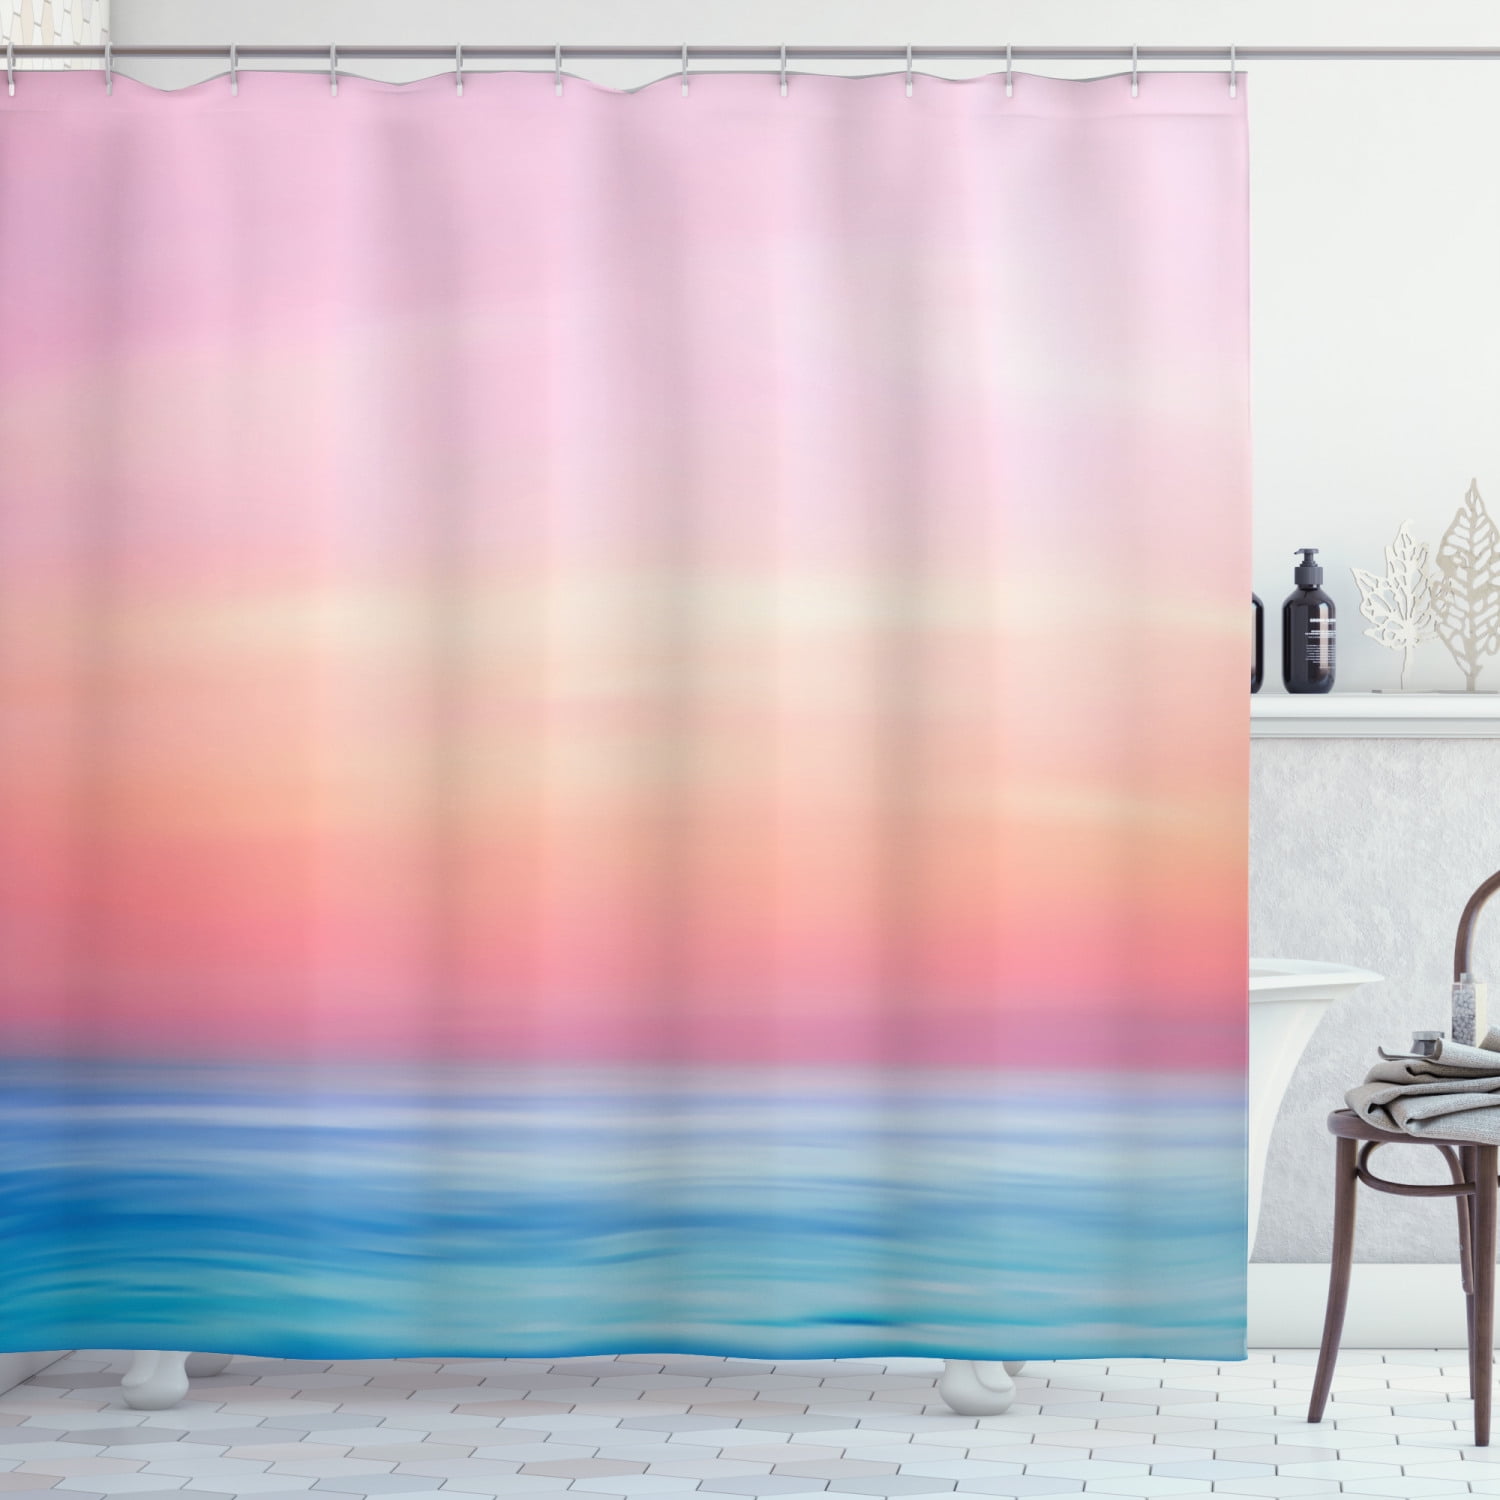 Details about   Sunset Art Shower Curtain Bathroom Plastic Waterproof Mildew Splash Resistant  